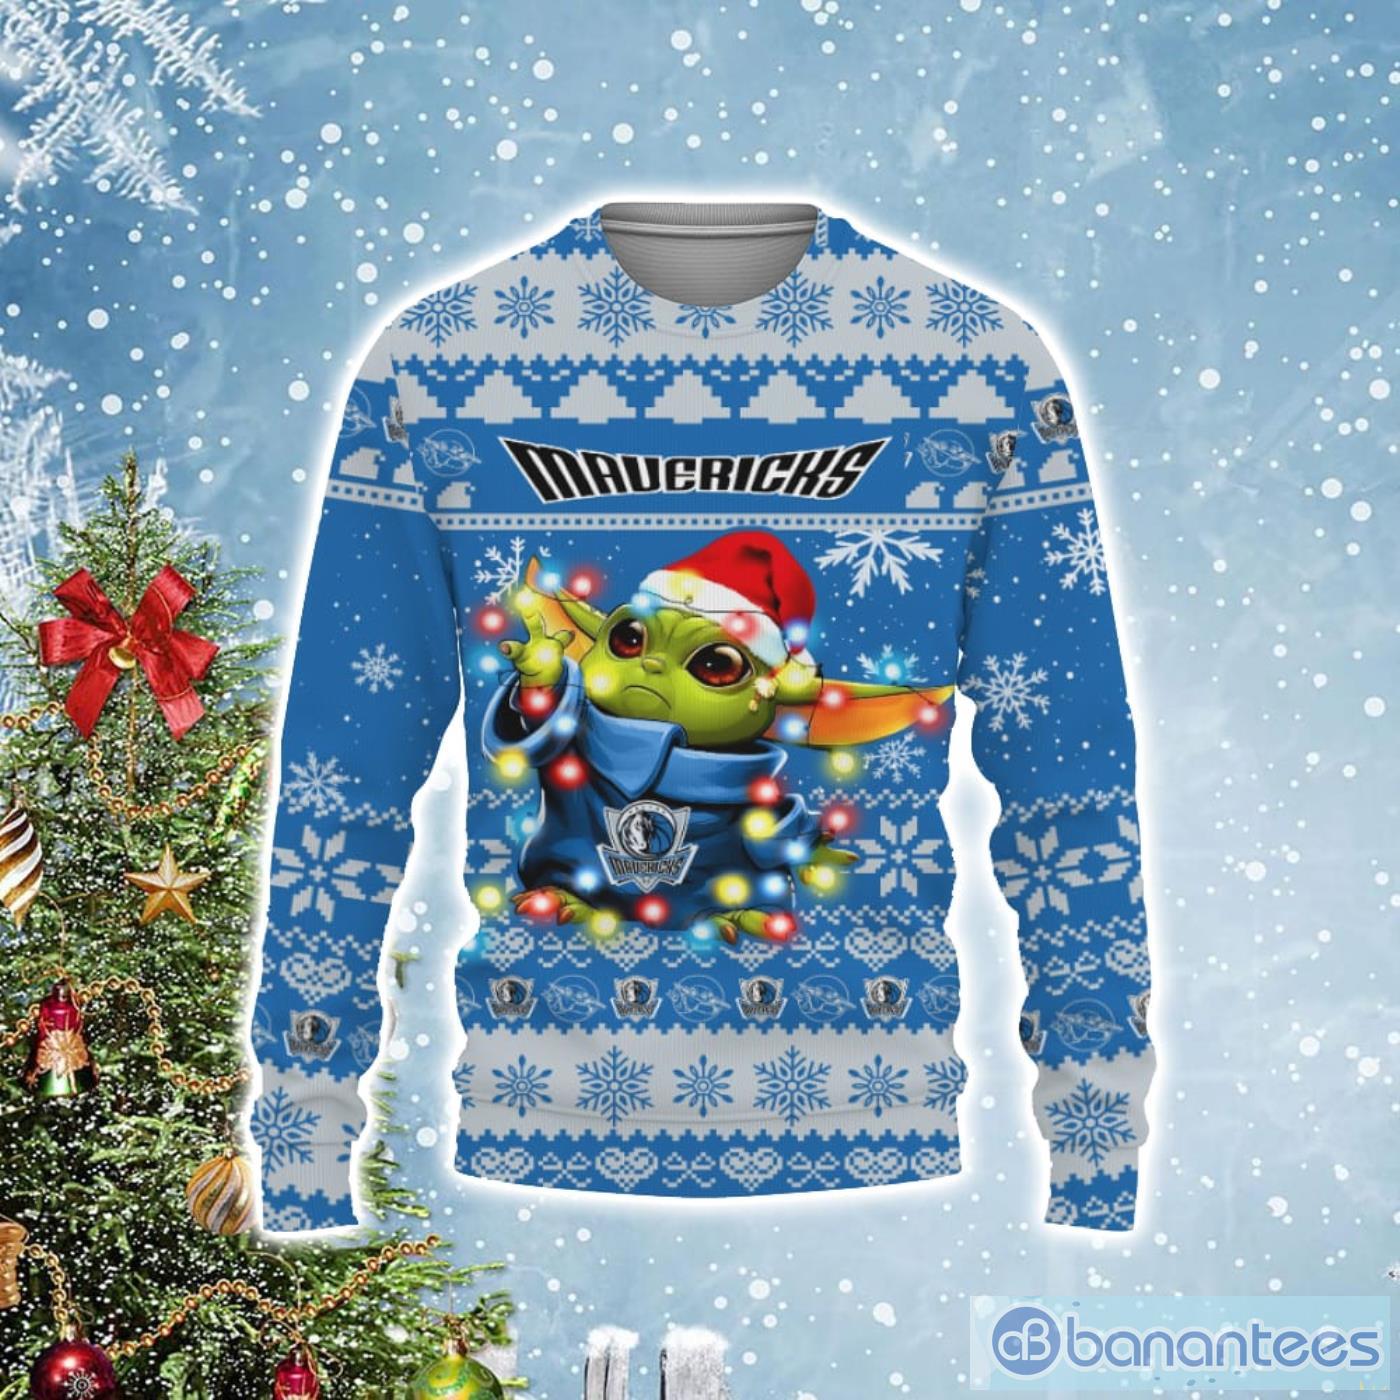 dallas mavericks ugly sweater